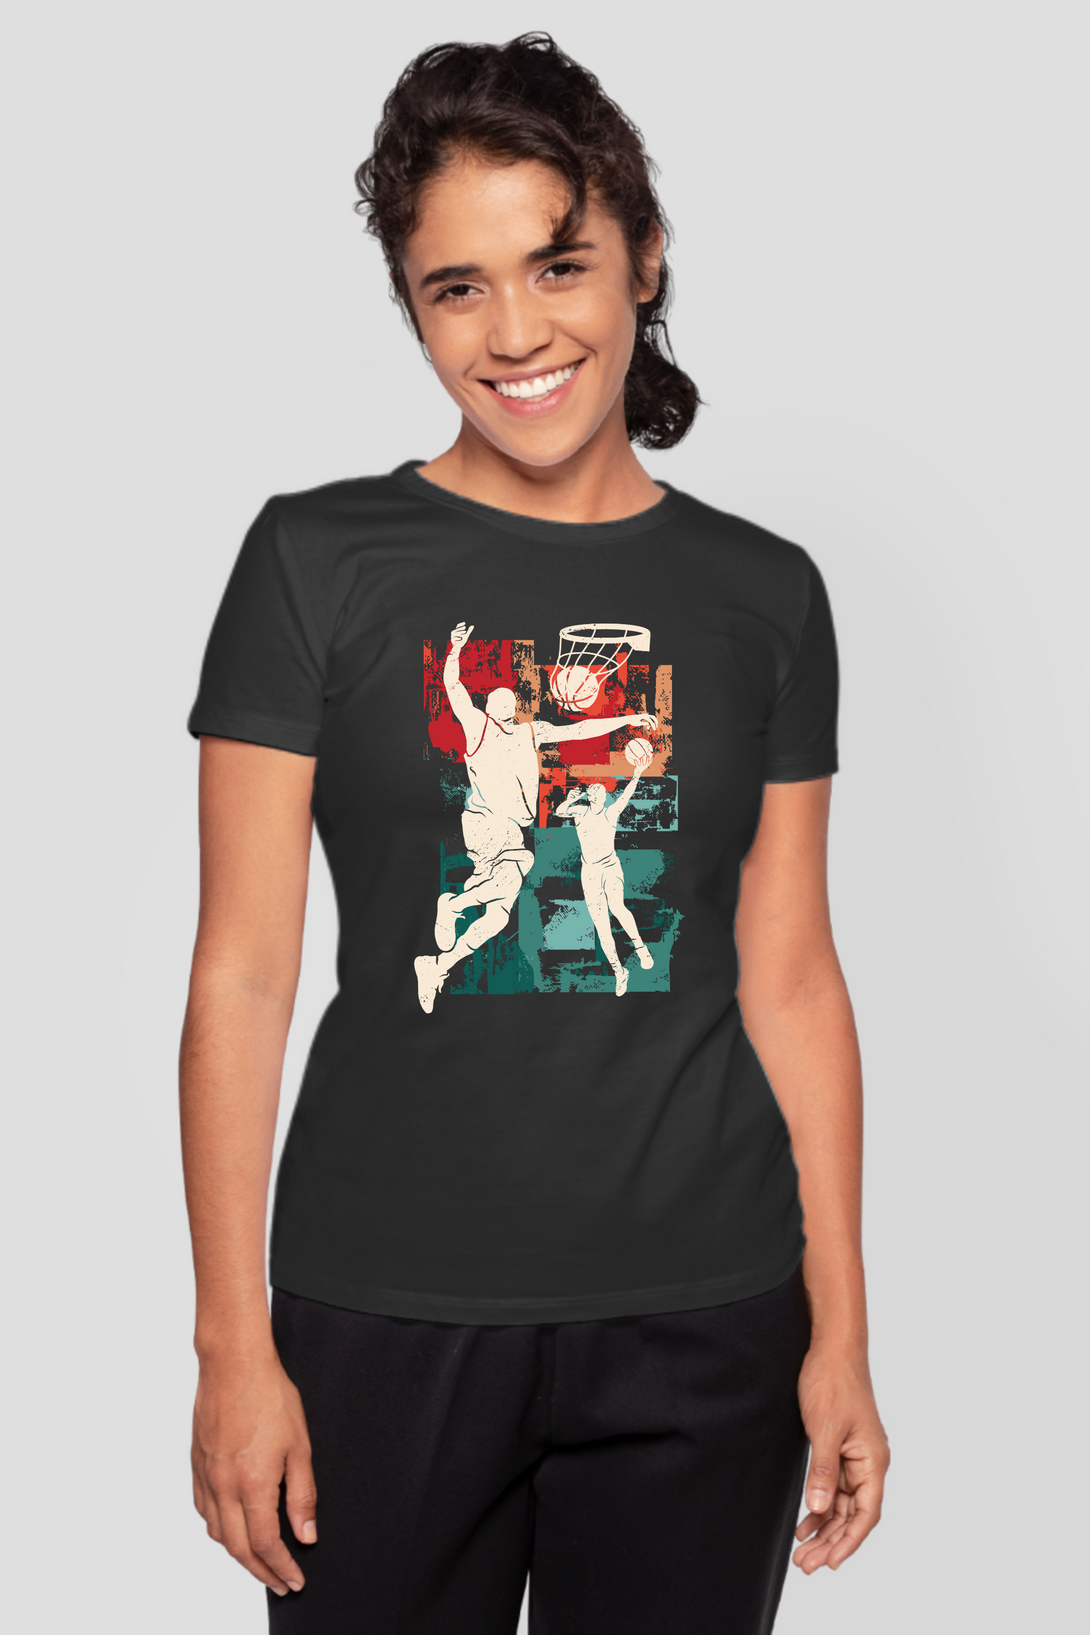 Basketball Legends Black Printed T-Shirt For Women - WowWaves - 4